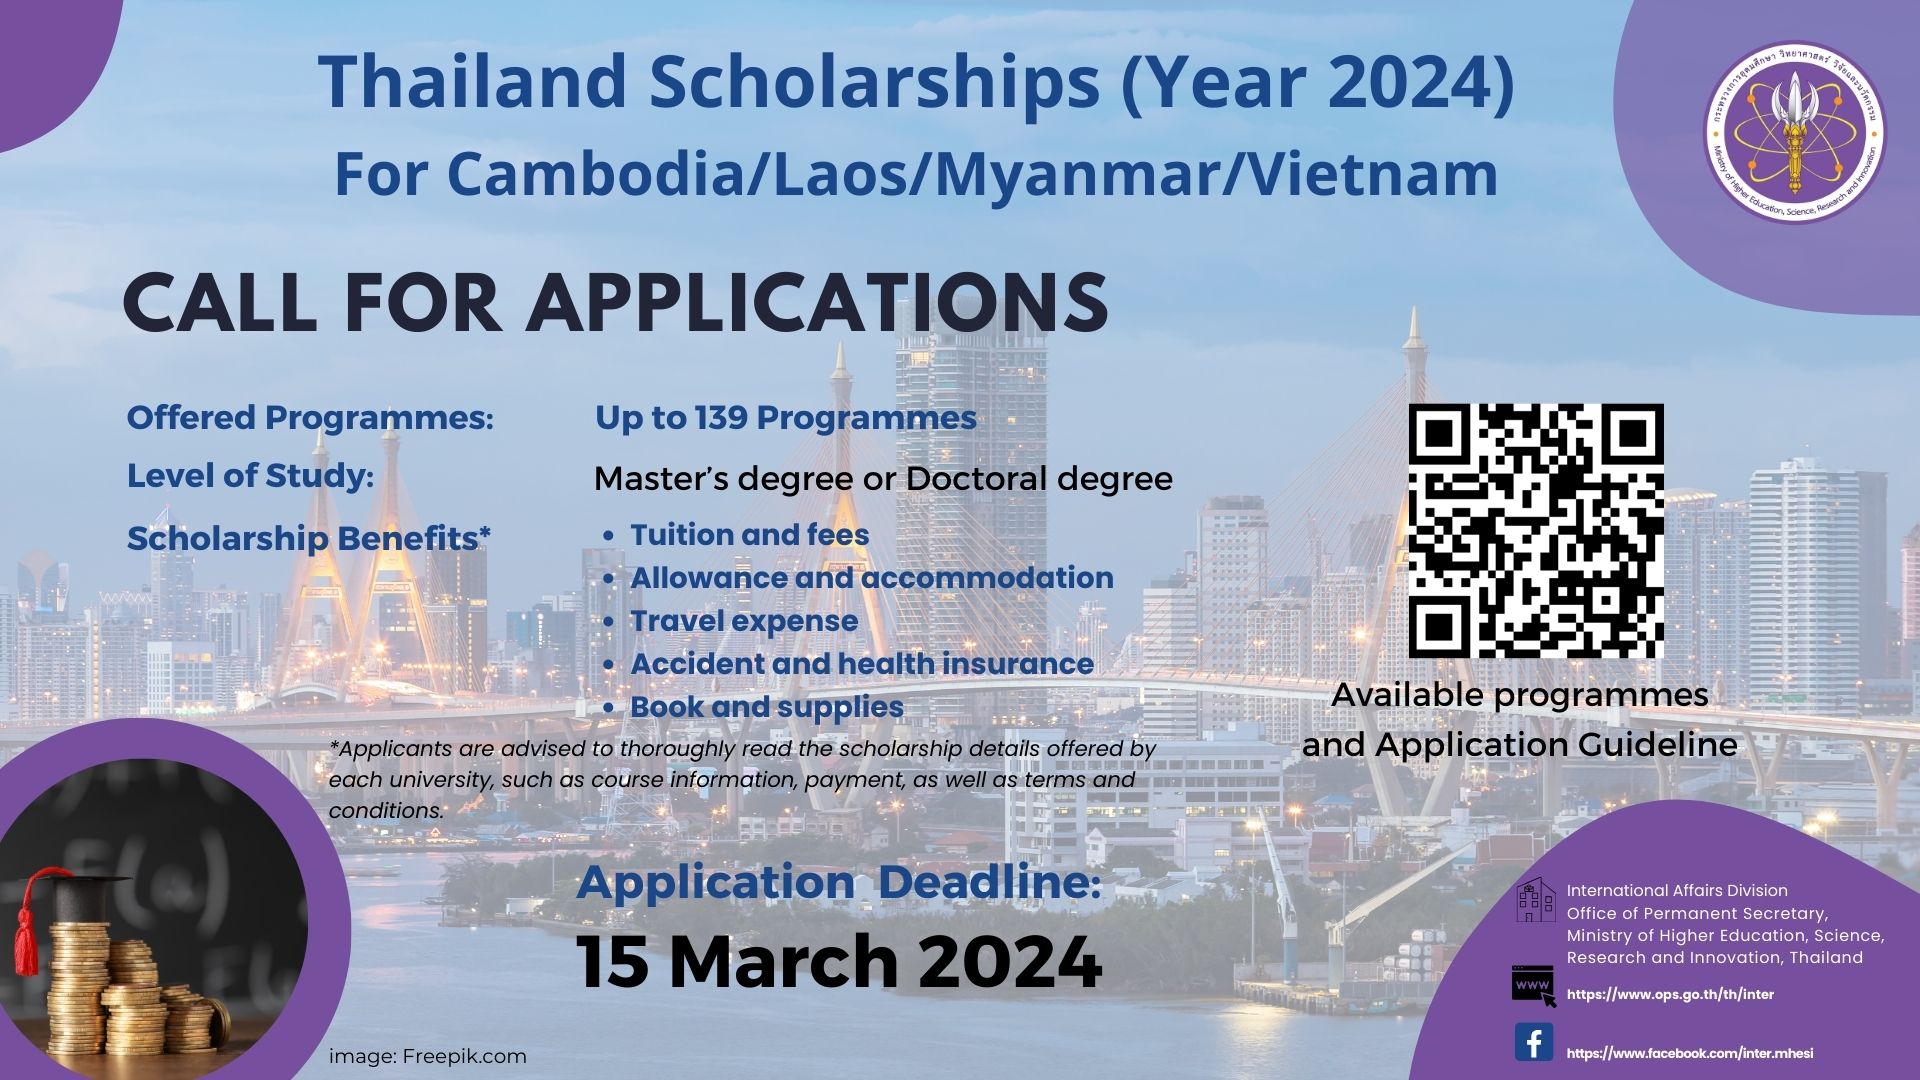 Thailand scholarships Year 2024